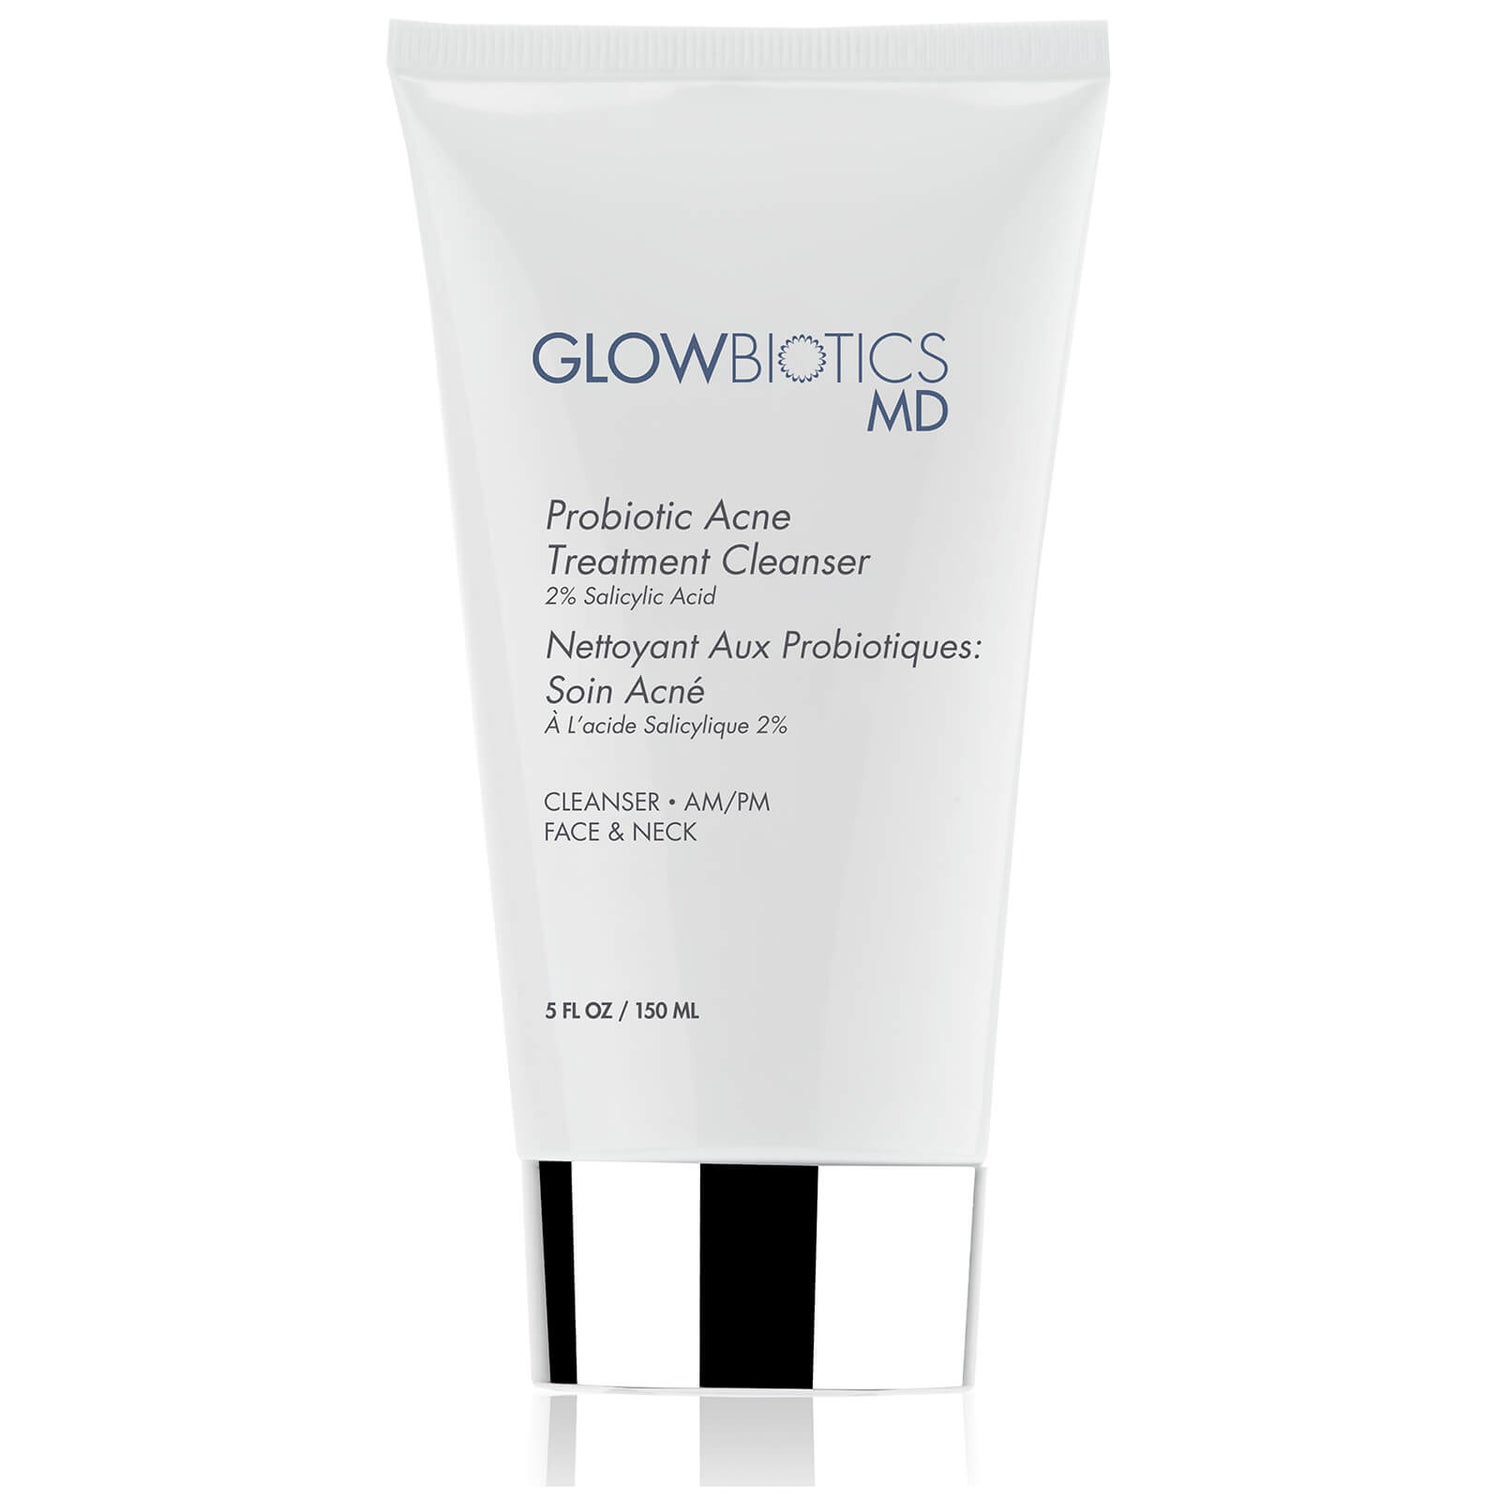 Glowbiotics MD Probiotic Acne Treatment Cleanser (2% Salicylic Acid)